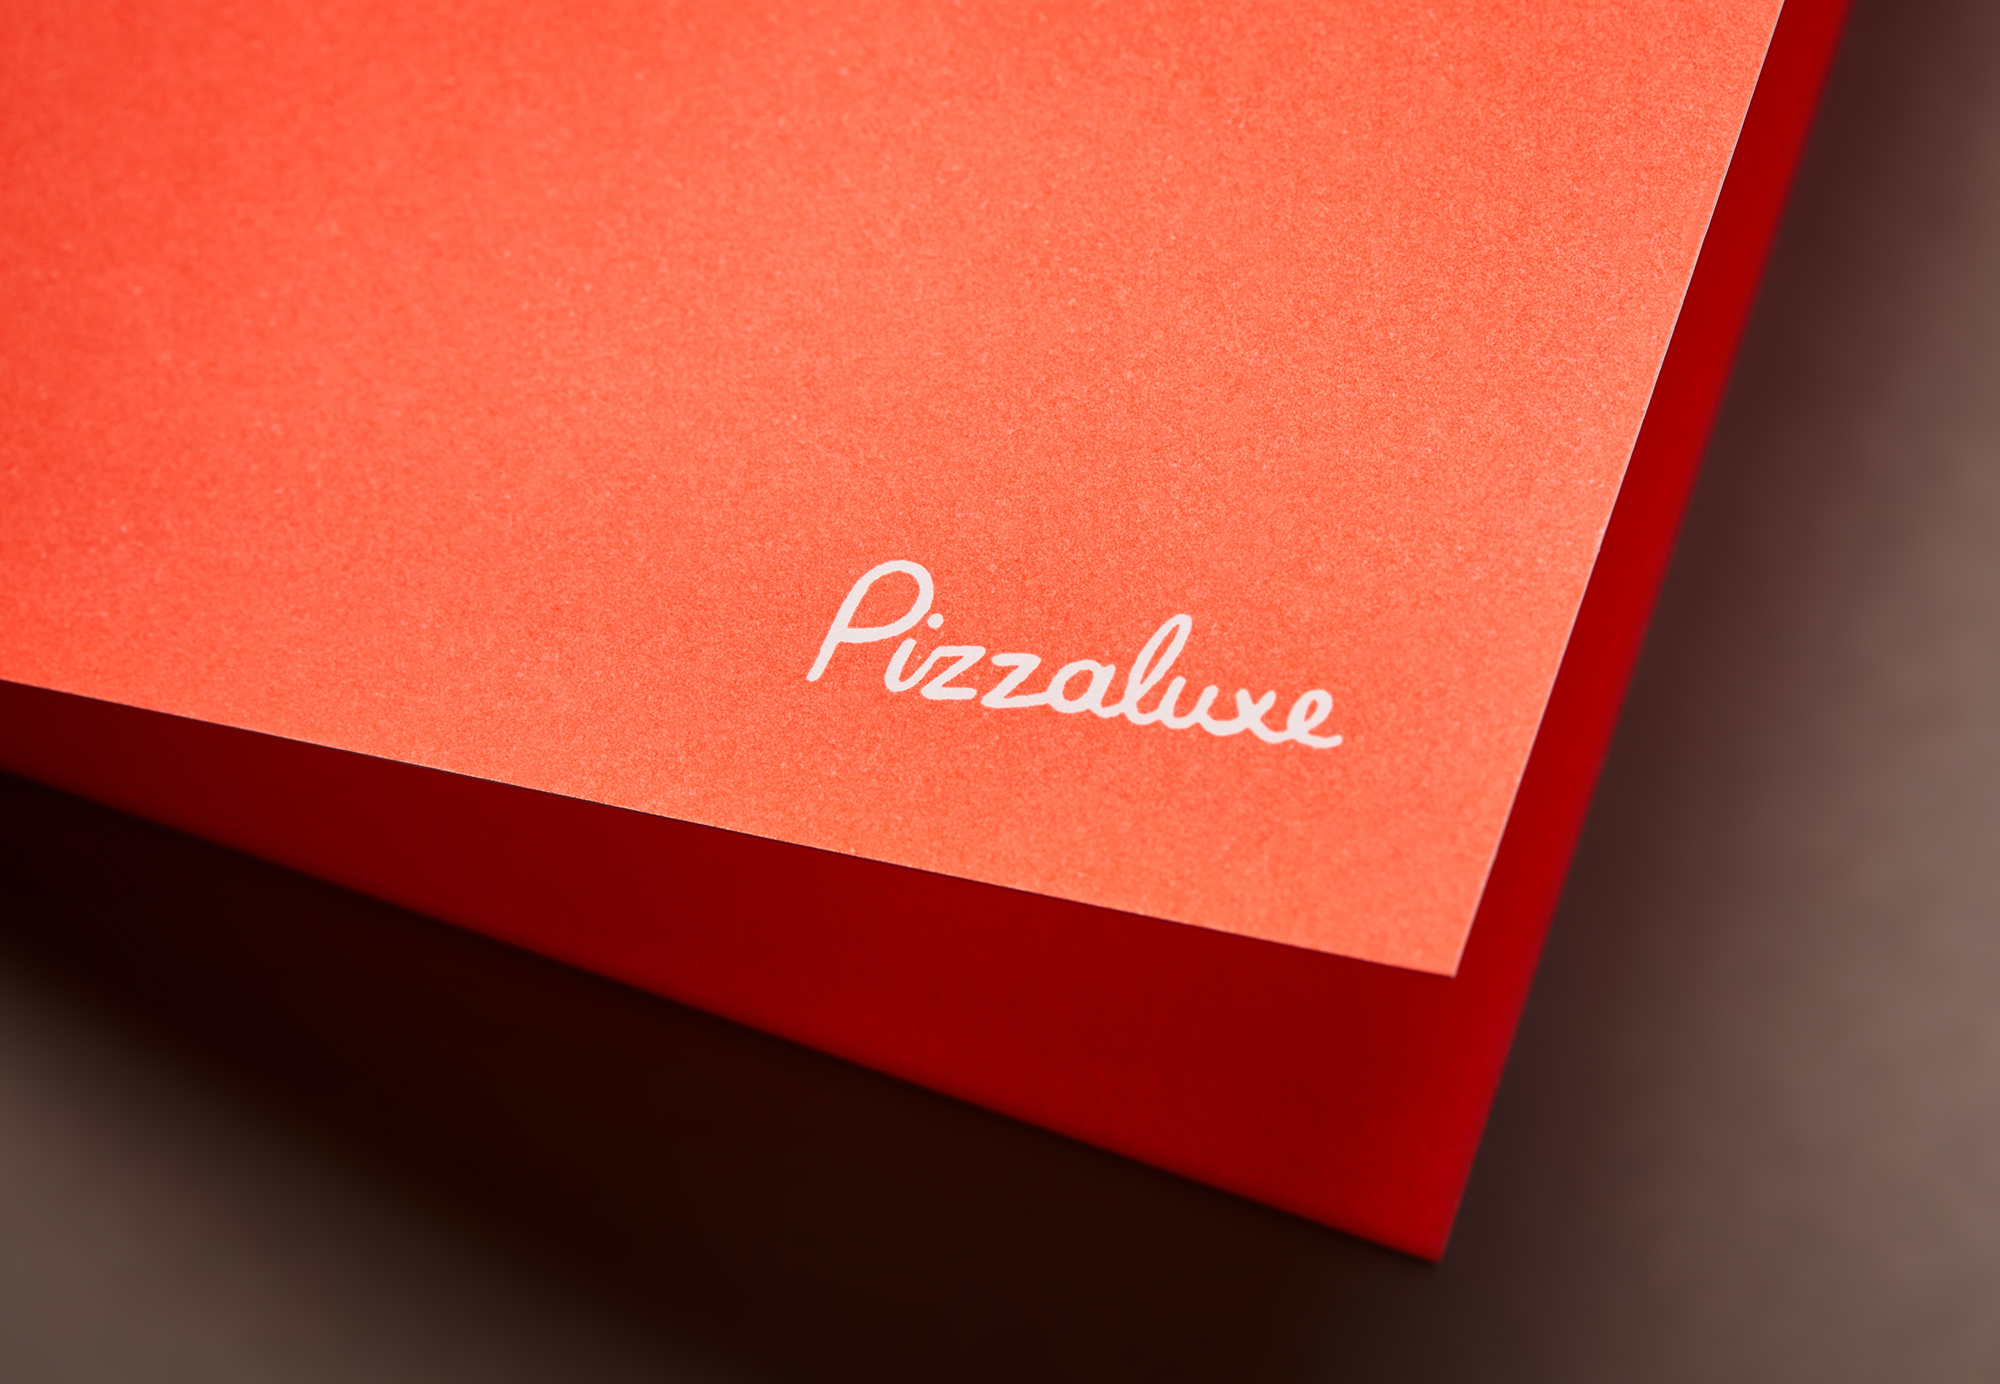 Pizzaluxe Brand Identity Spotlight